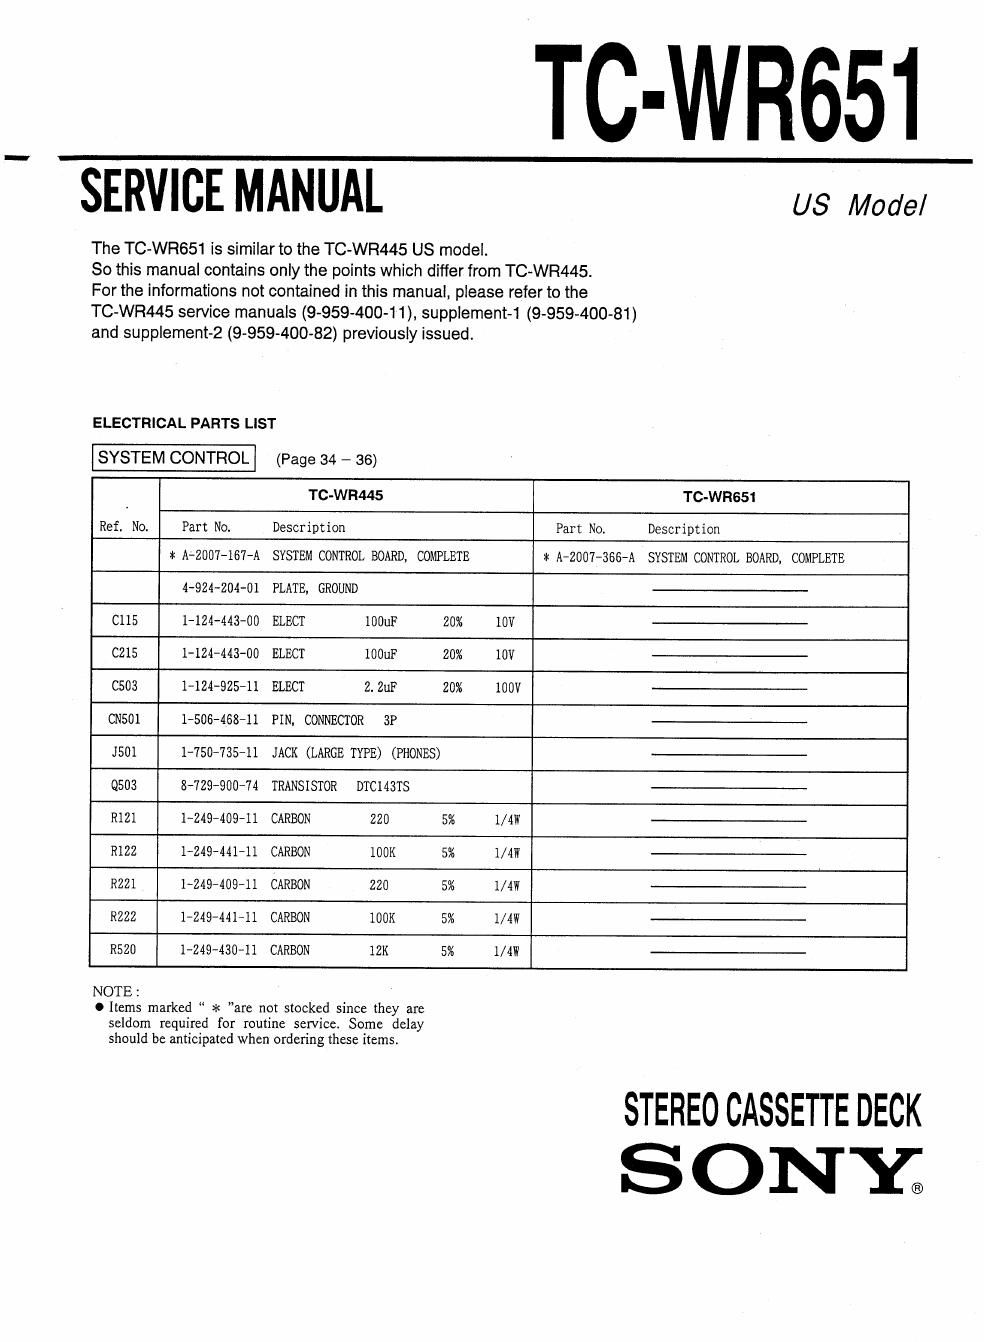 sony tc wr 651 service manual